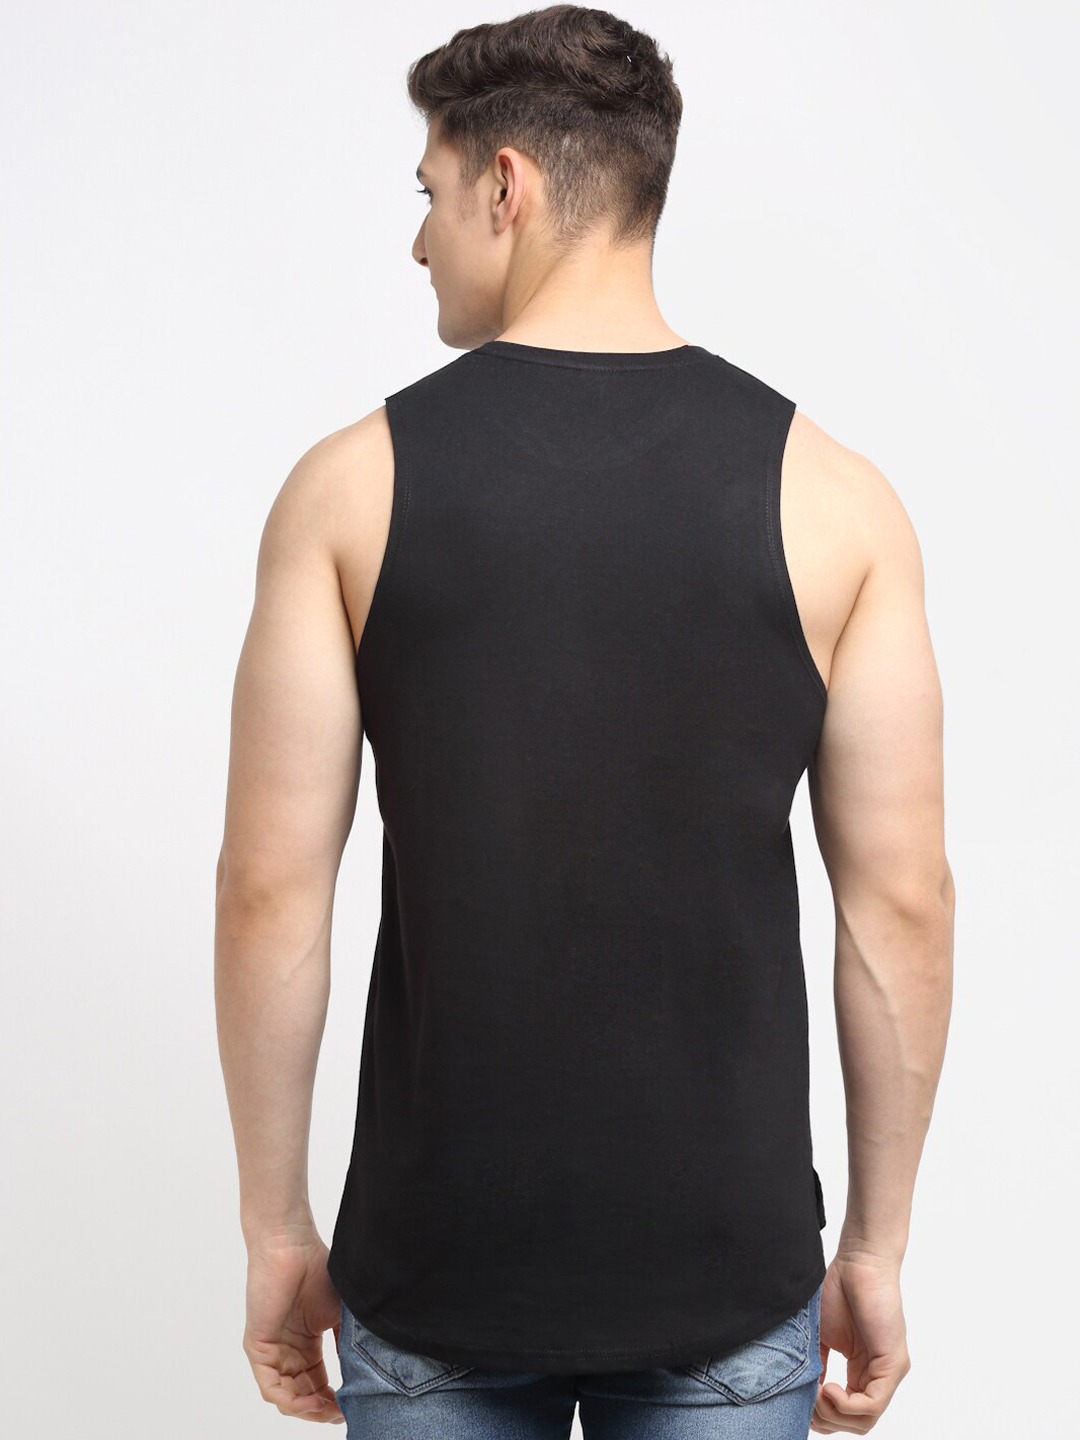 Clothing Innerwear Vests | Friskers Men Black Printed Cotton Innerwear Vests - FH92928